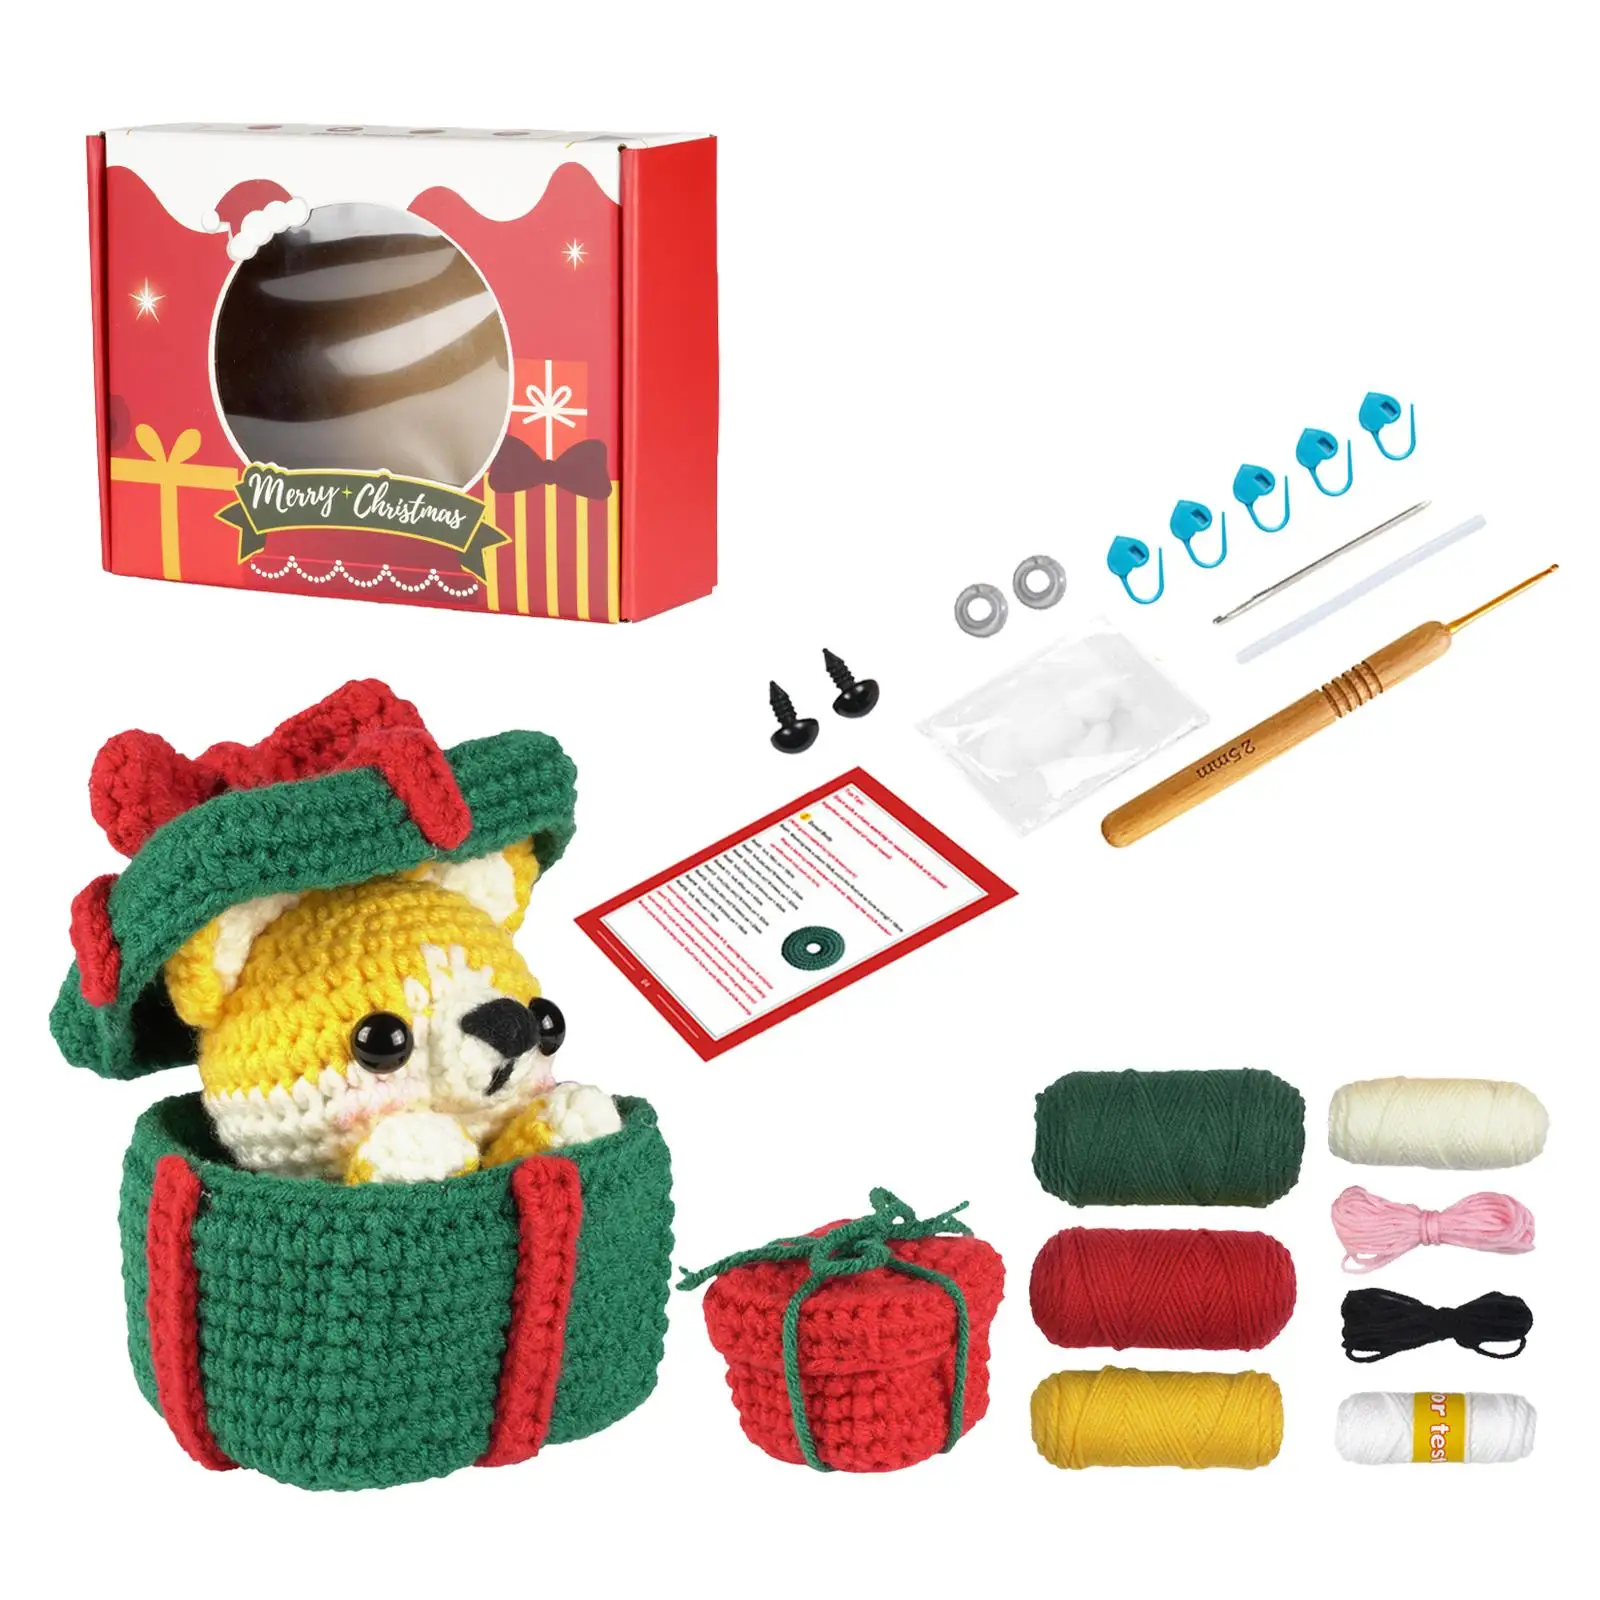 Christmas Crochet Kits Make Your Own Doll Crochet Starter Kits for Christmas Gift Patios Birthday Gift Christmas Tree Porches